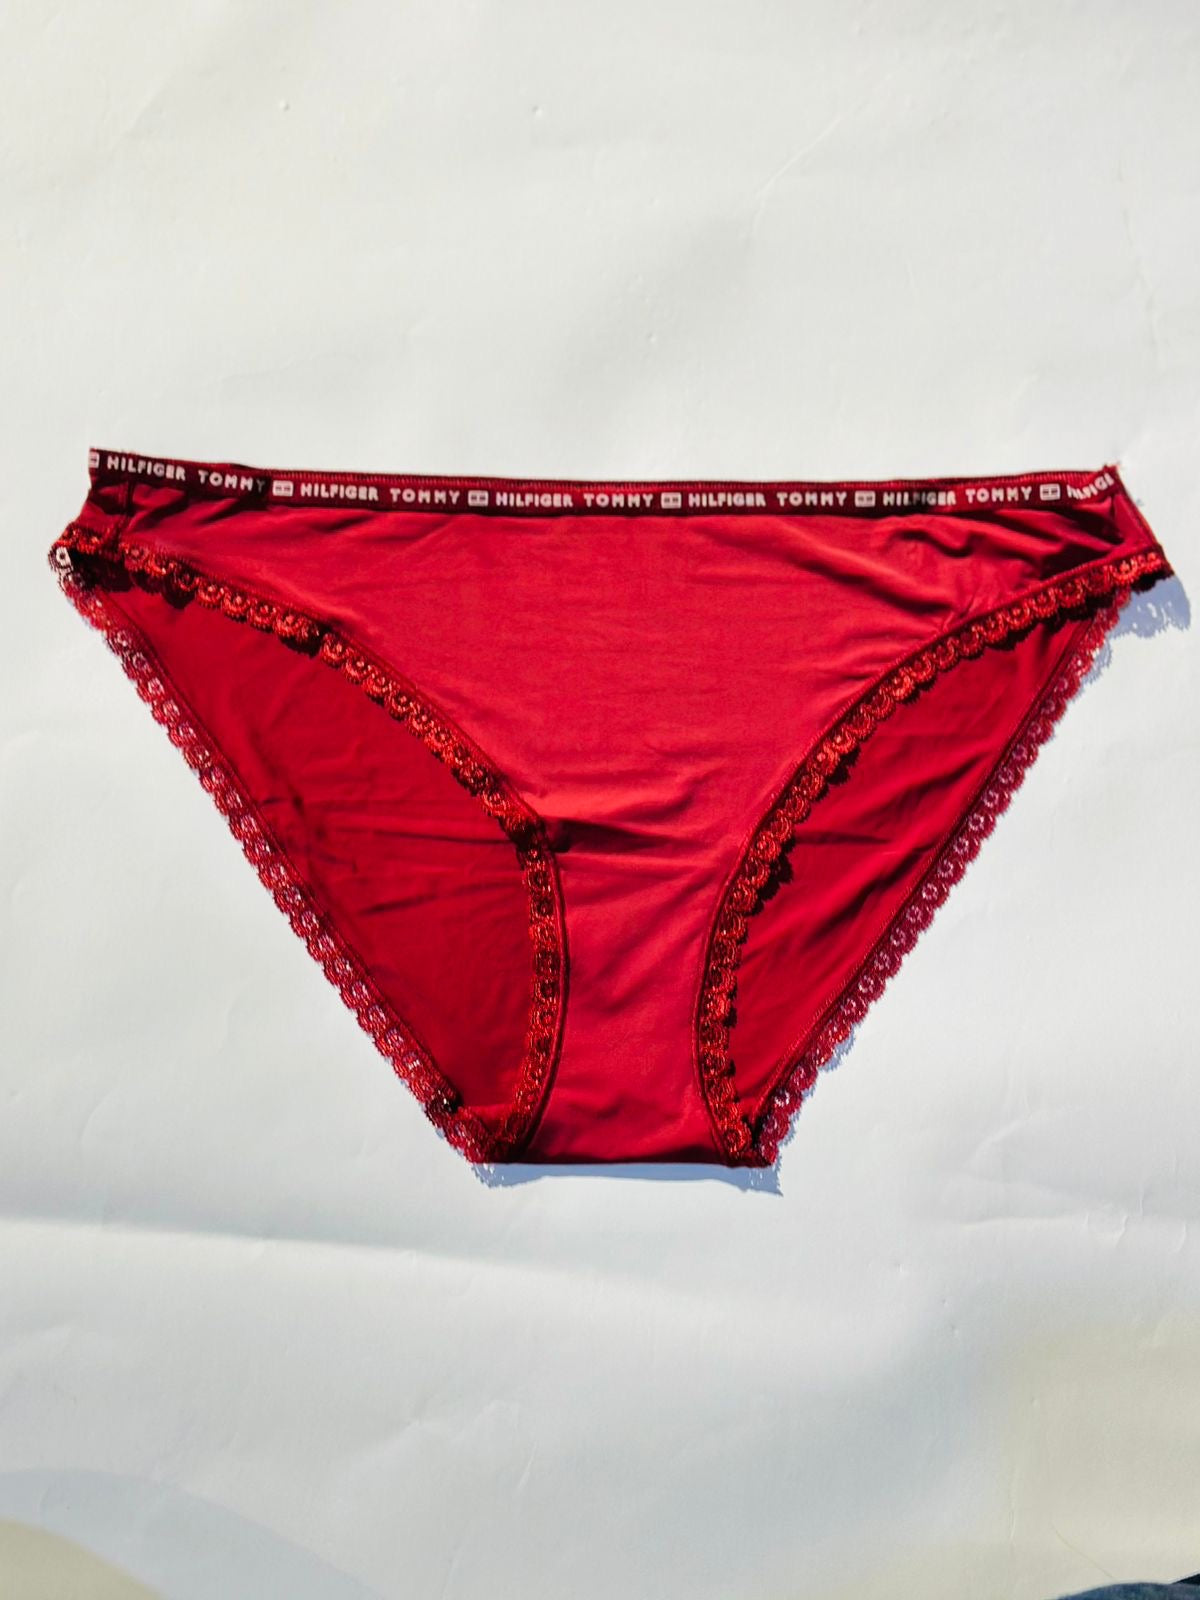 Tommy Hilfiger underwear size large